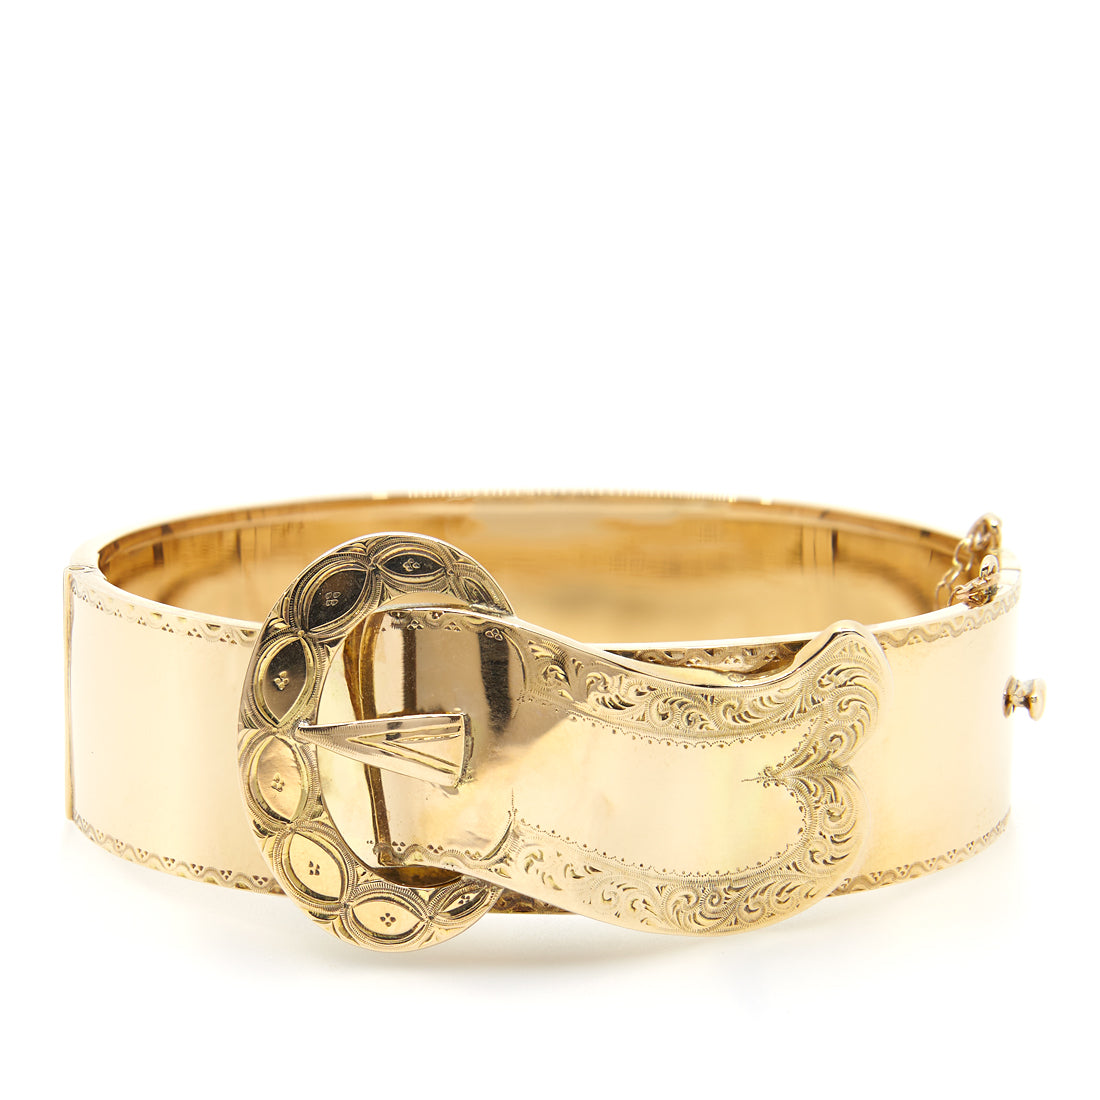 Antique gold bracelet with clasp